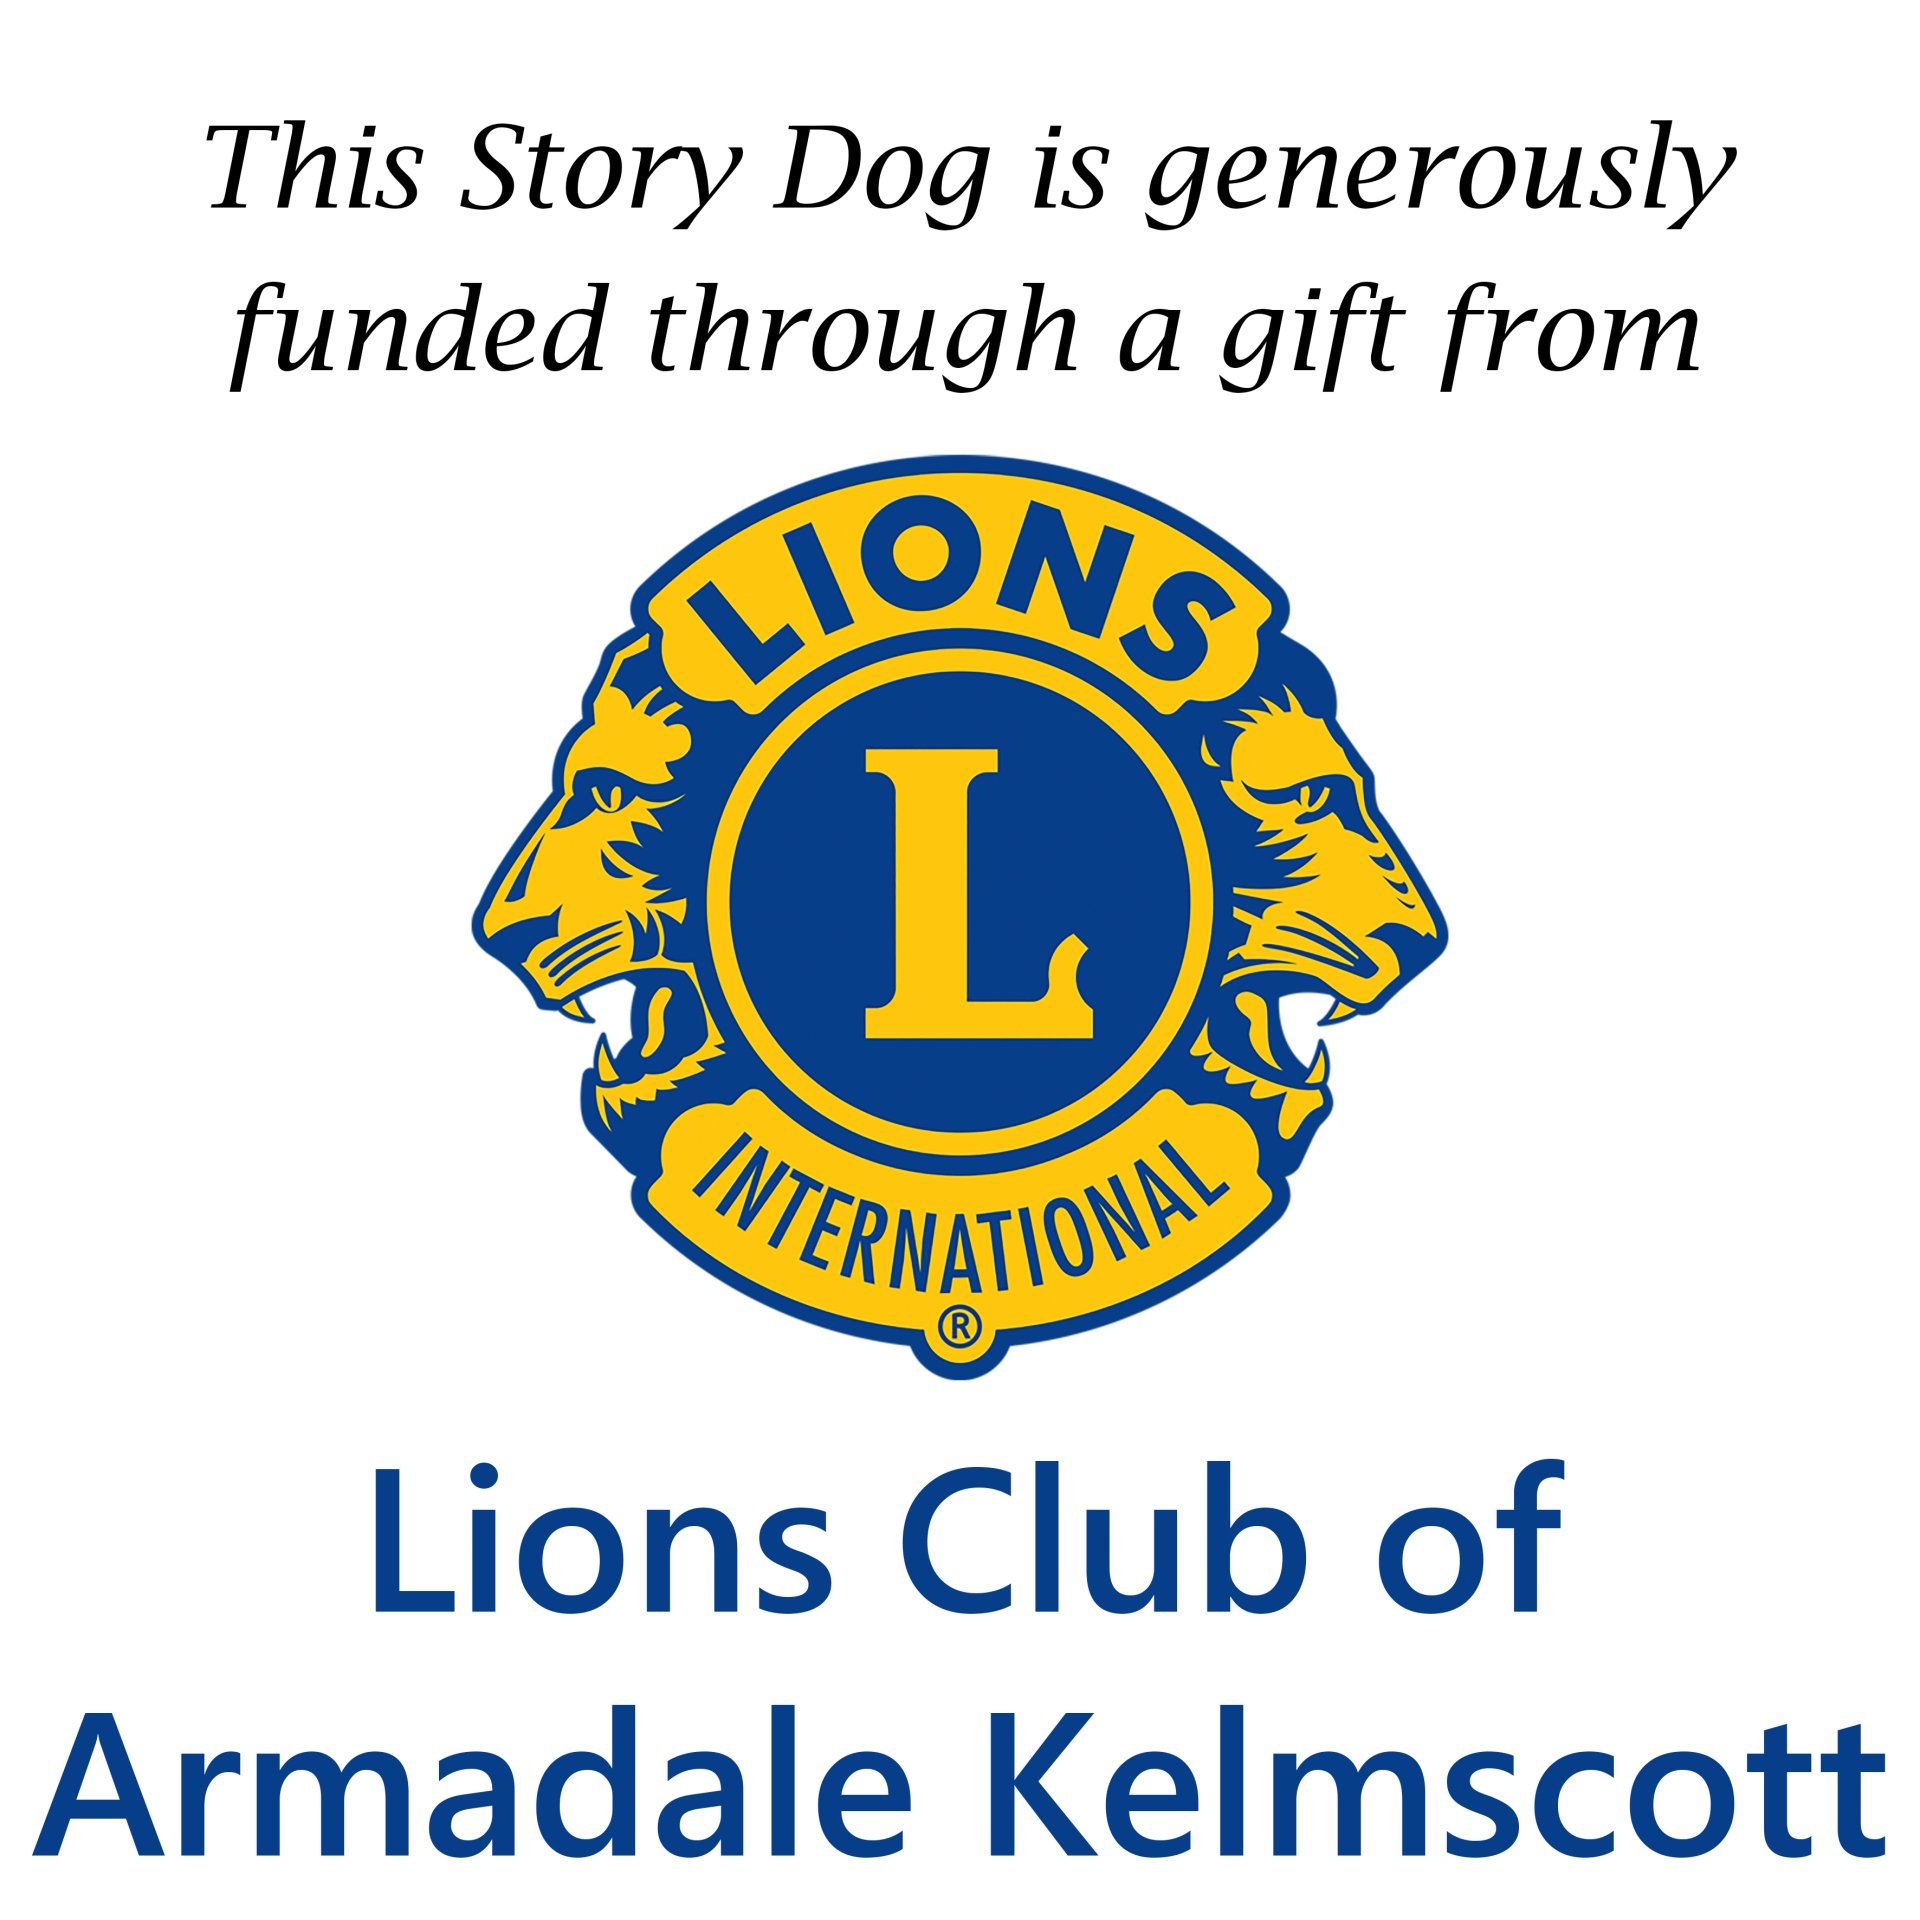 Lions Club of Armadale Kelmscott